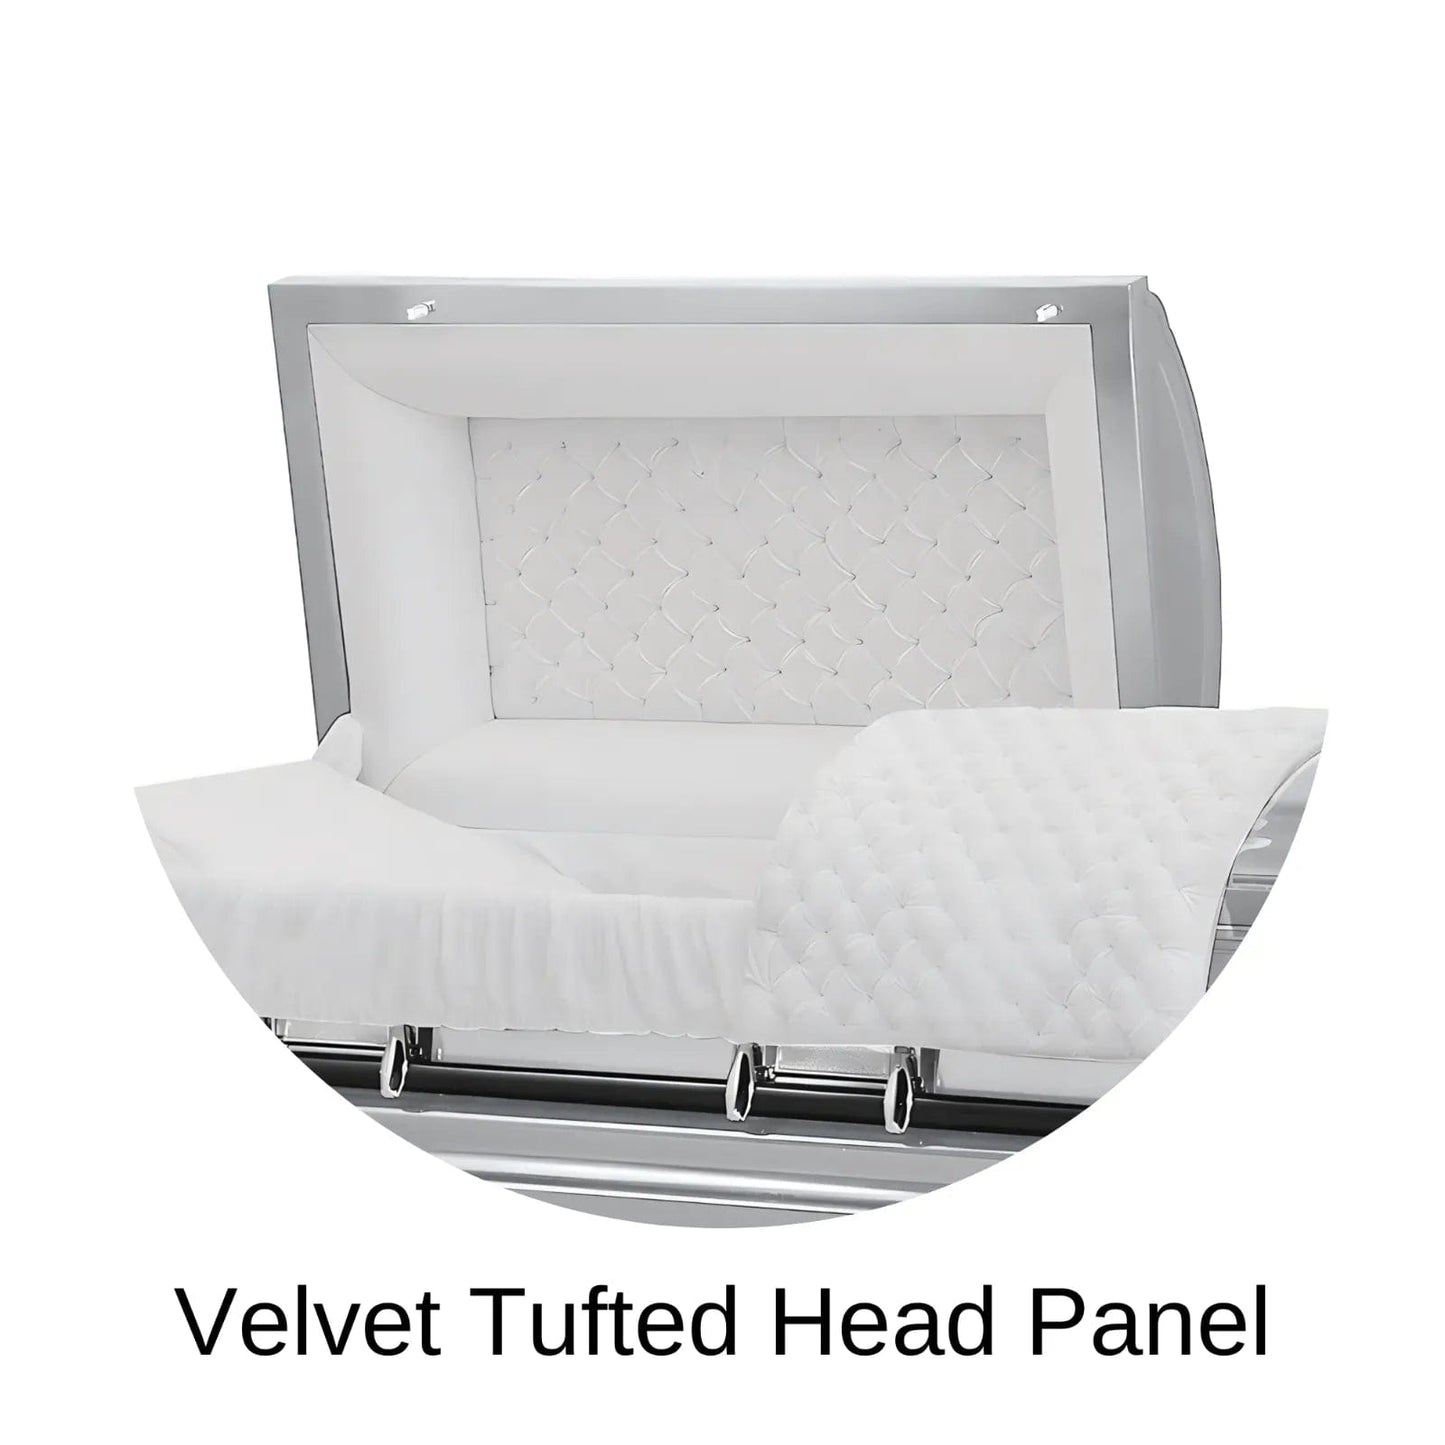 Velvet Tufted Head Panel Of Titan Era Series Casket 